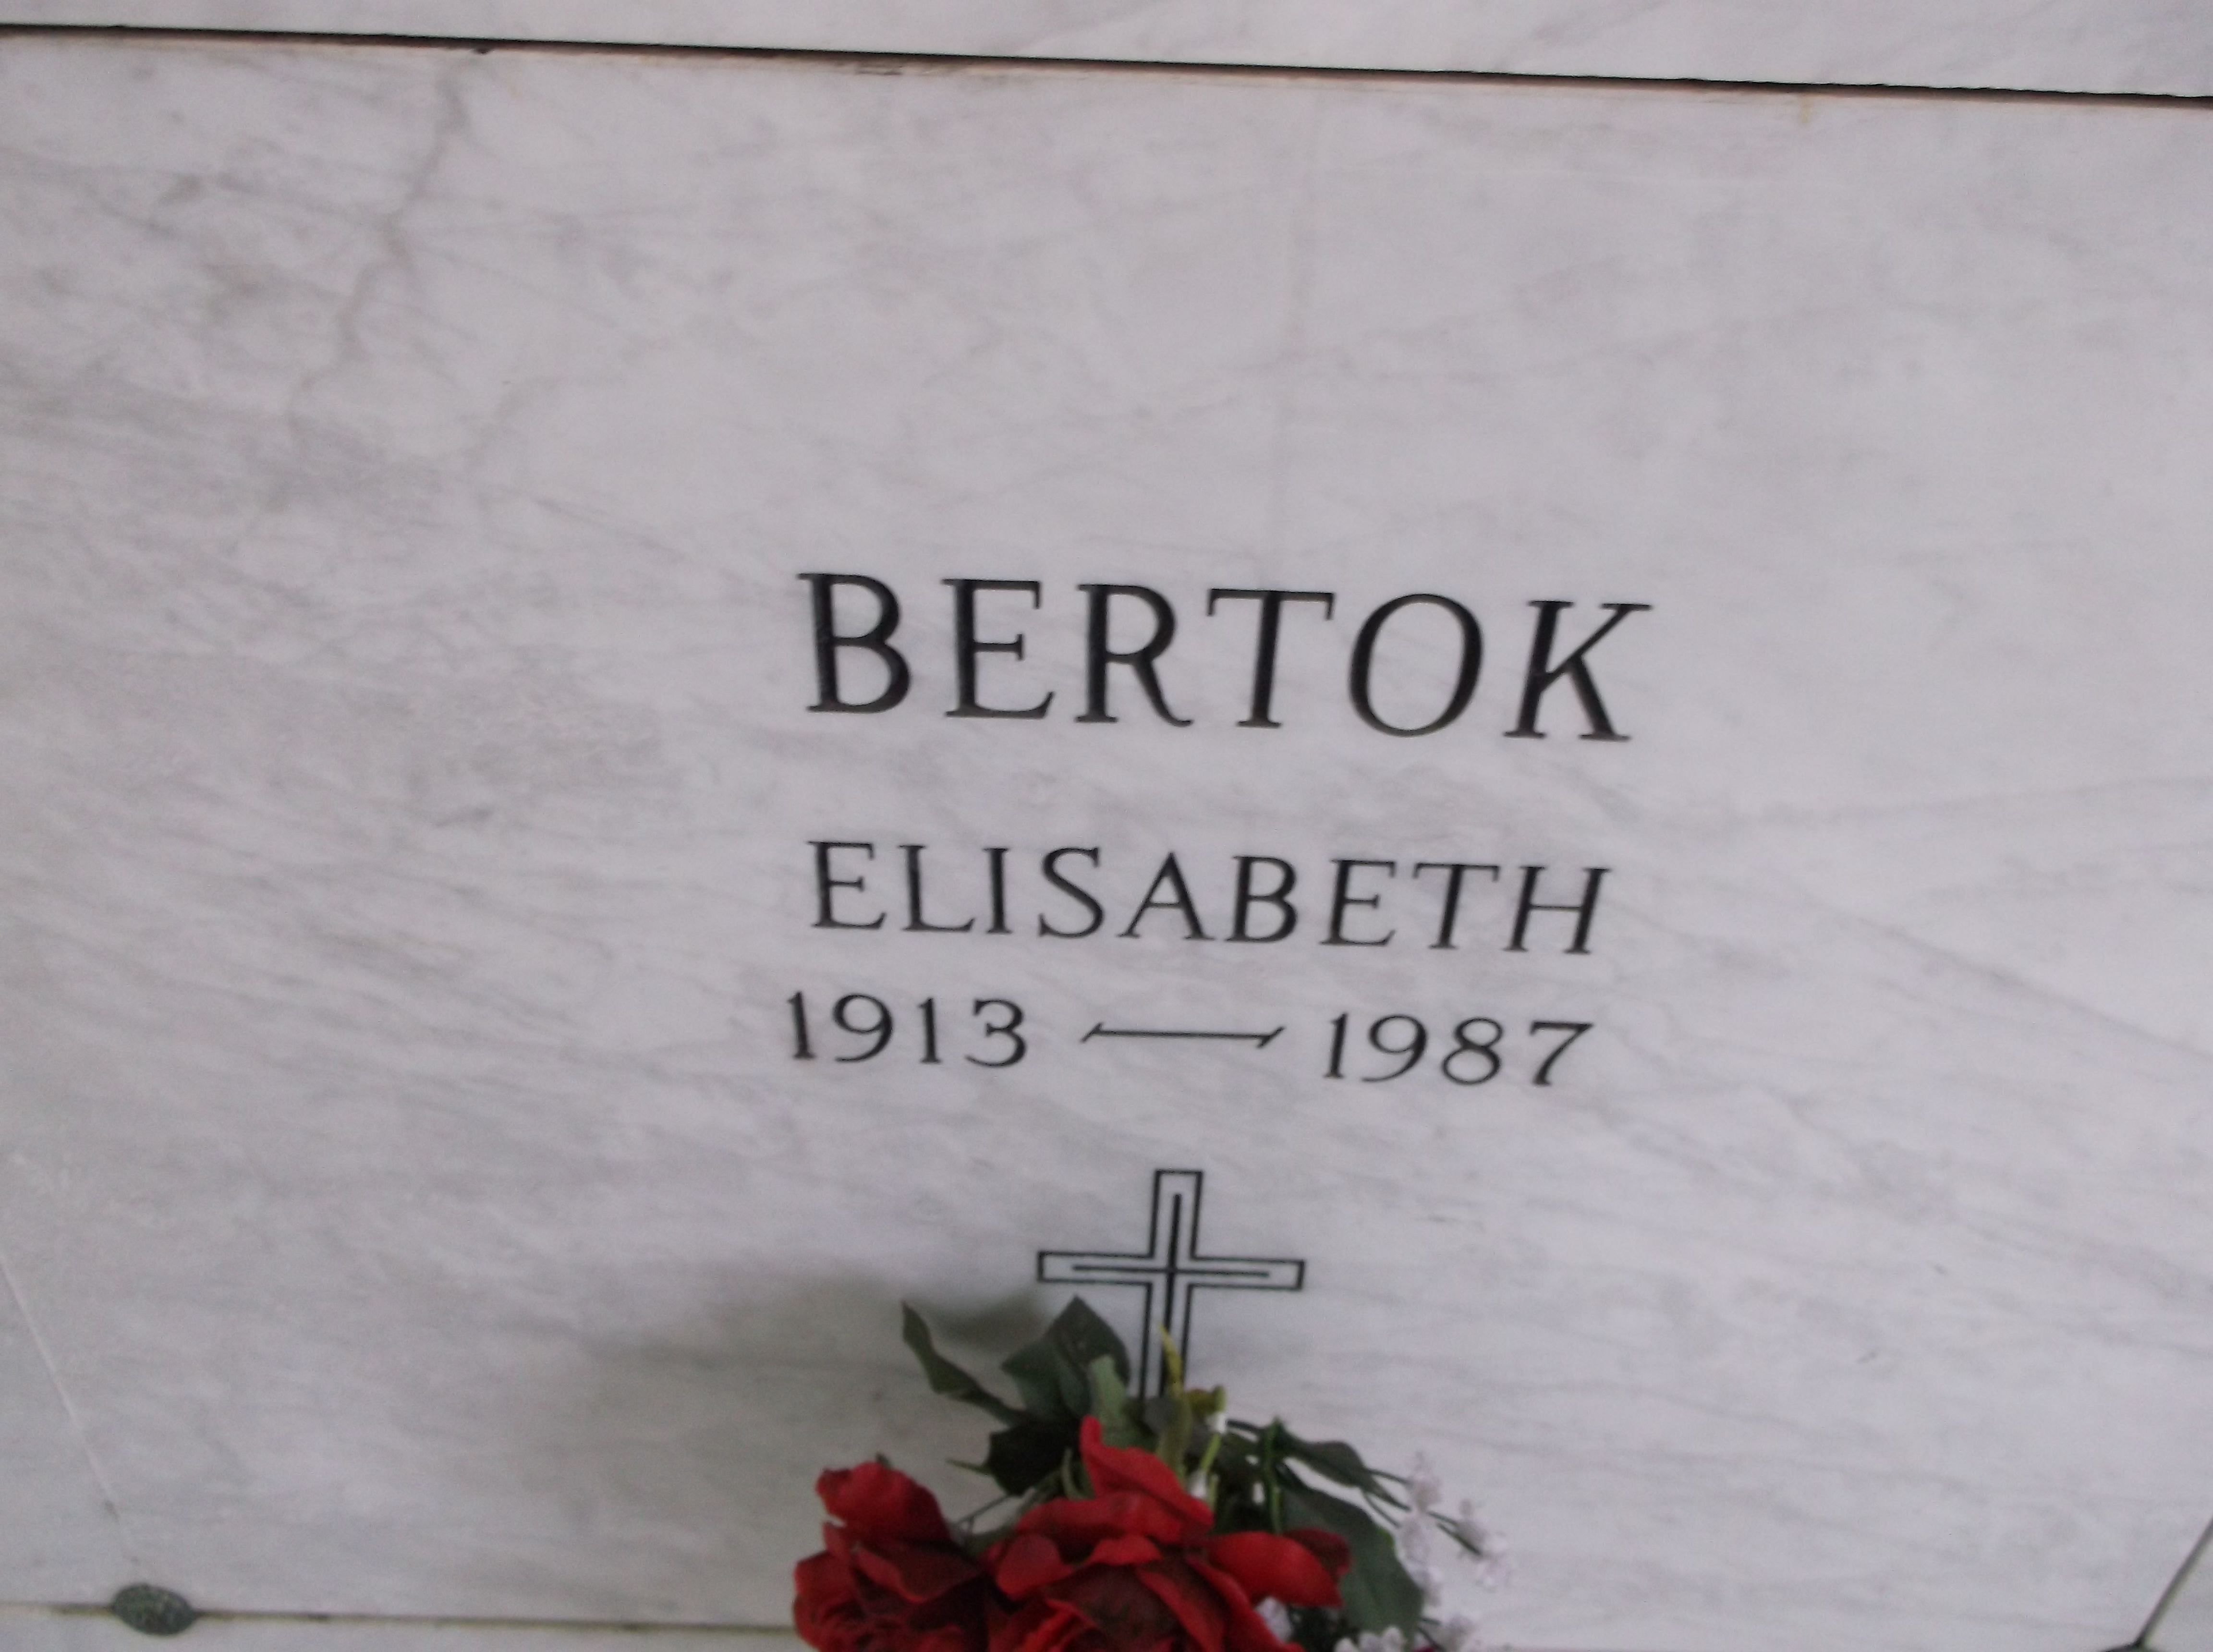 Elisabeth Bertok